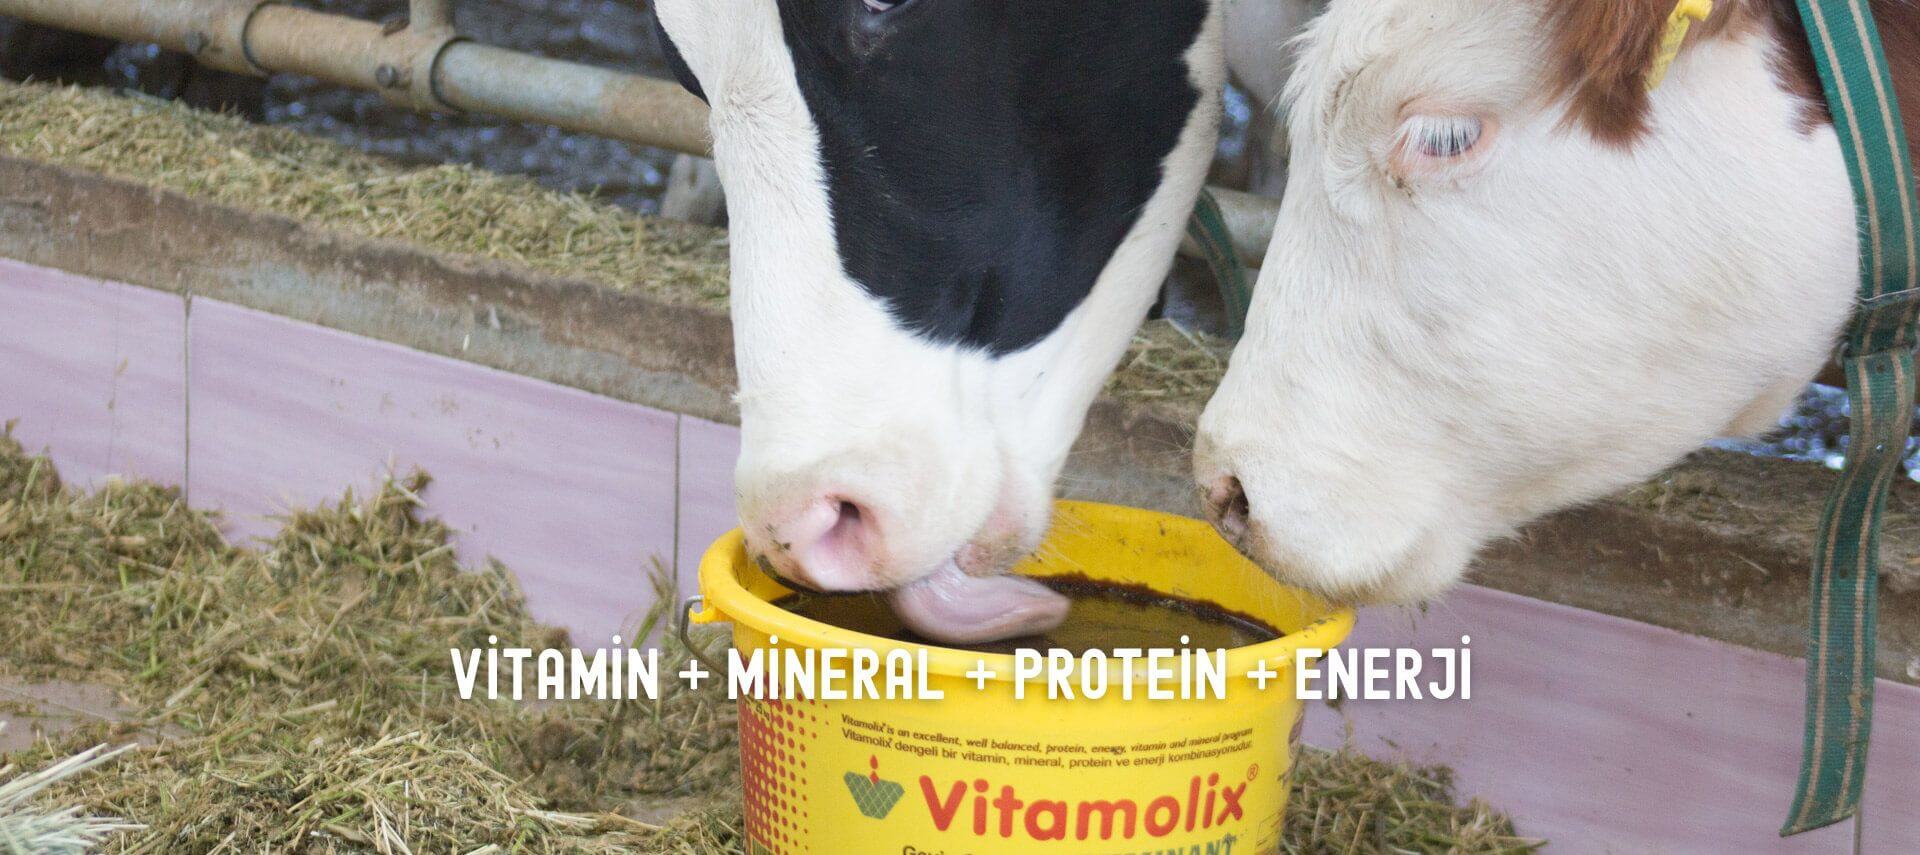 Vitamin + Mineral + Protein + Enerji